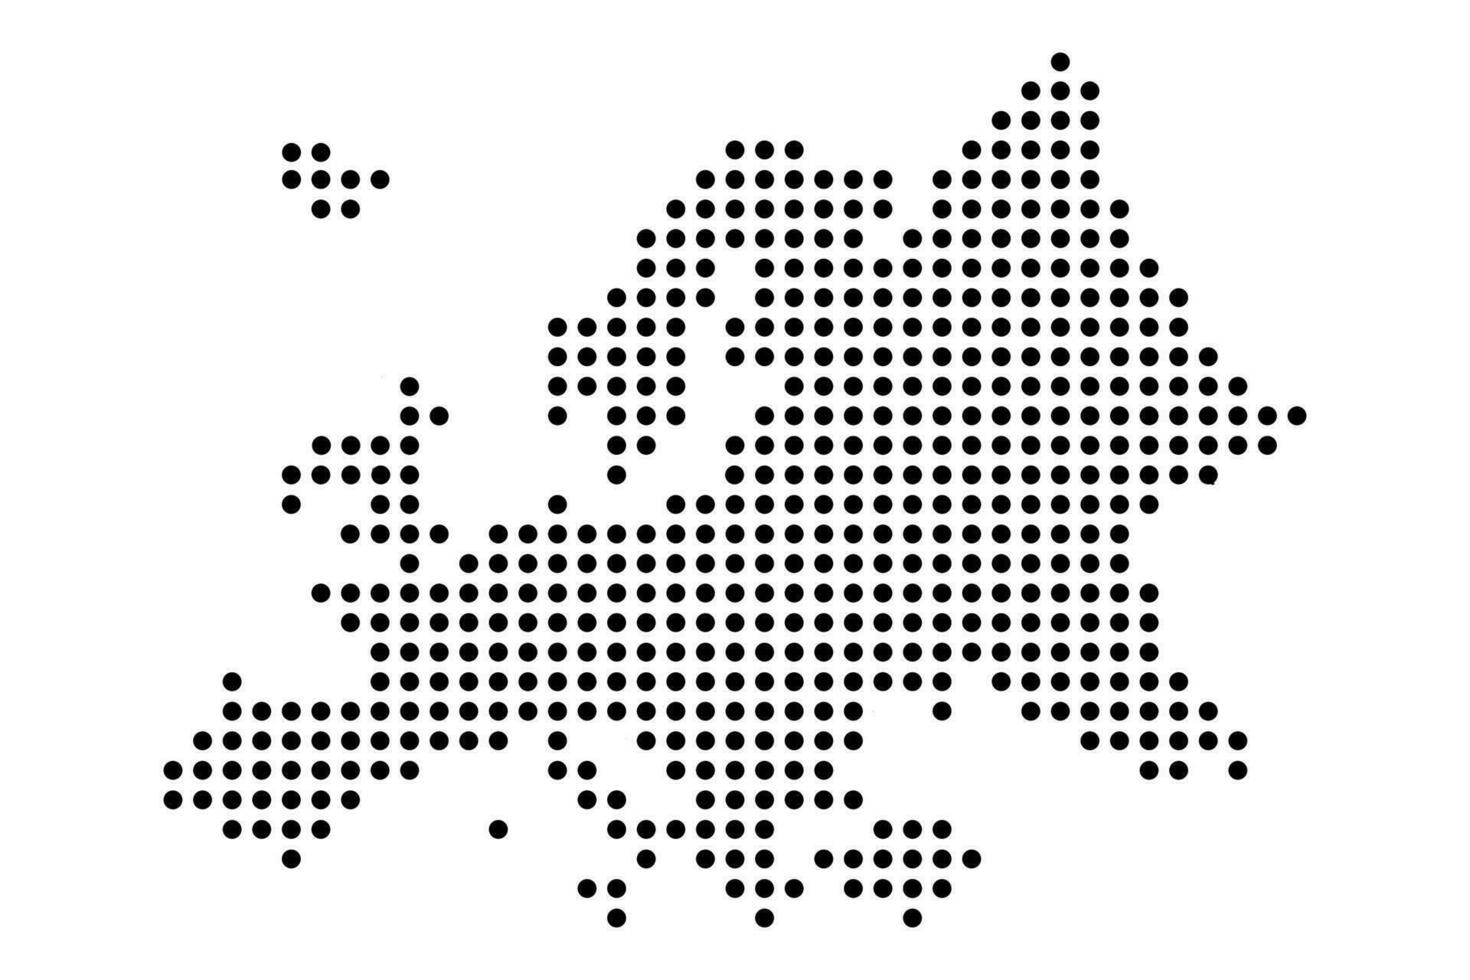 Europa punteado mapa ilustración. vector diseño.